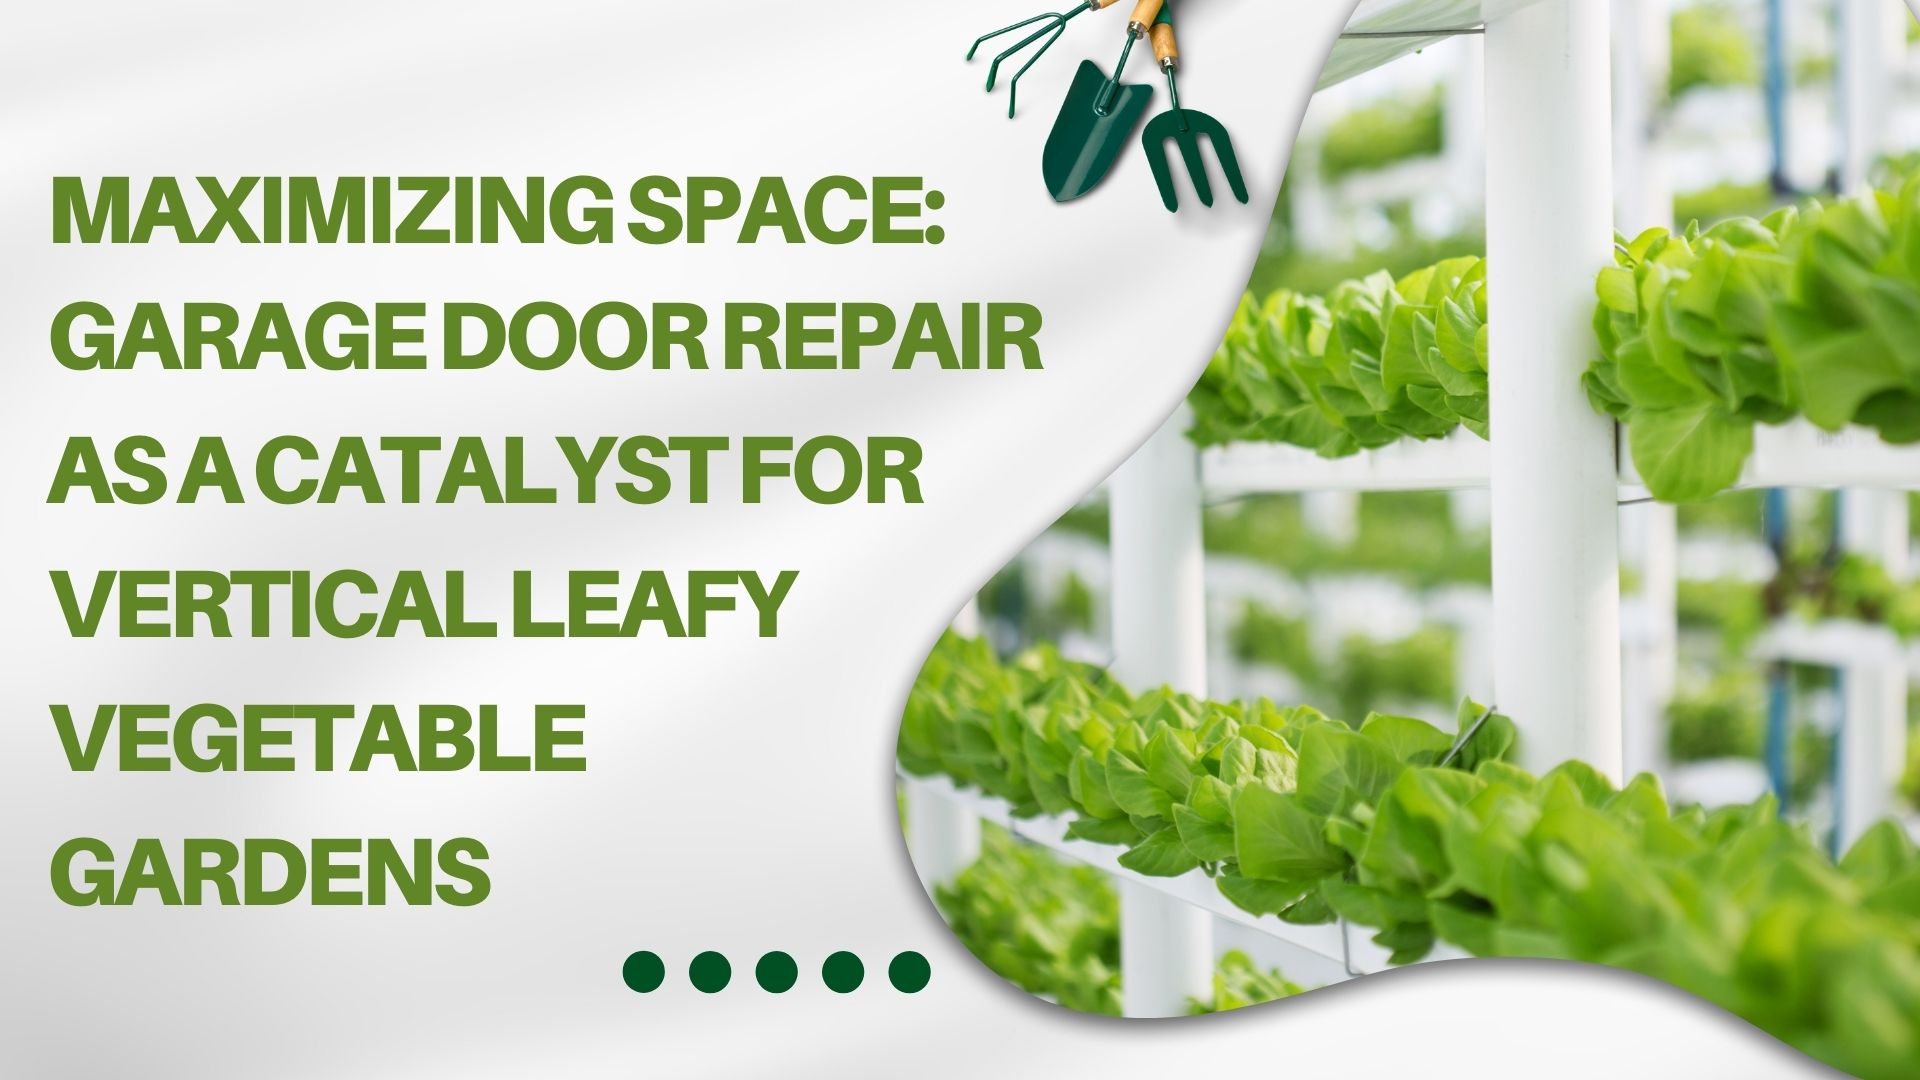 Garage Door Repair as a Catalyst for Vertical Leafy Vegetable Gardens